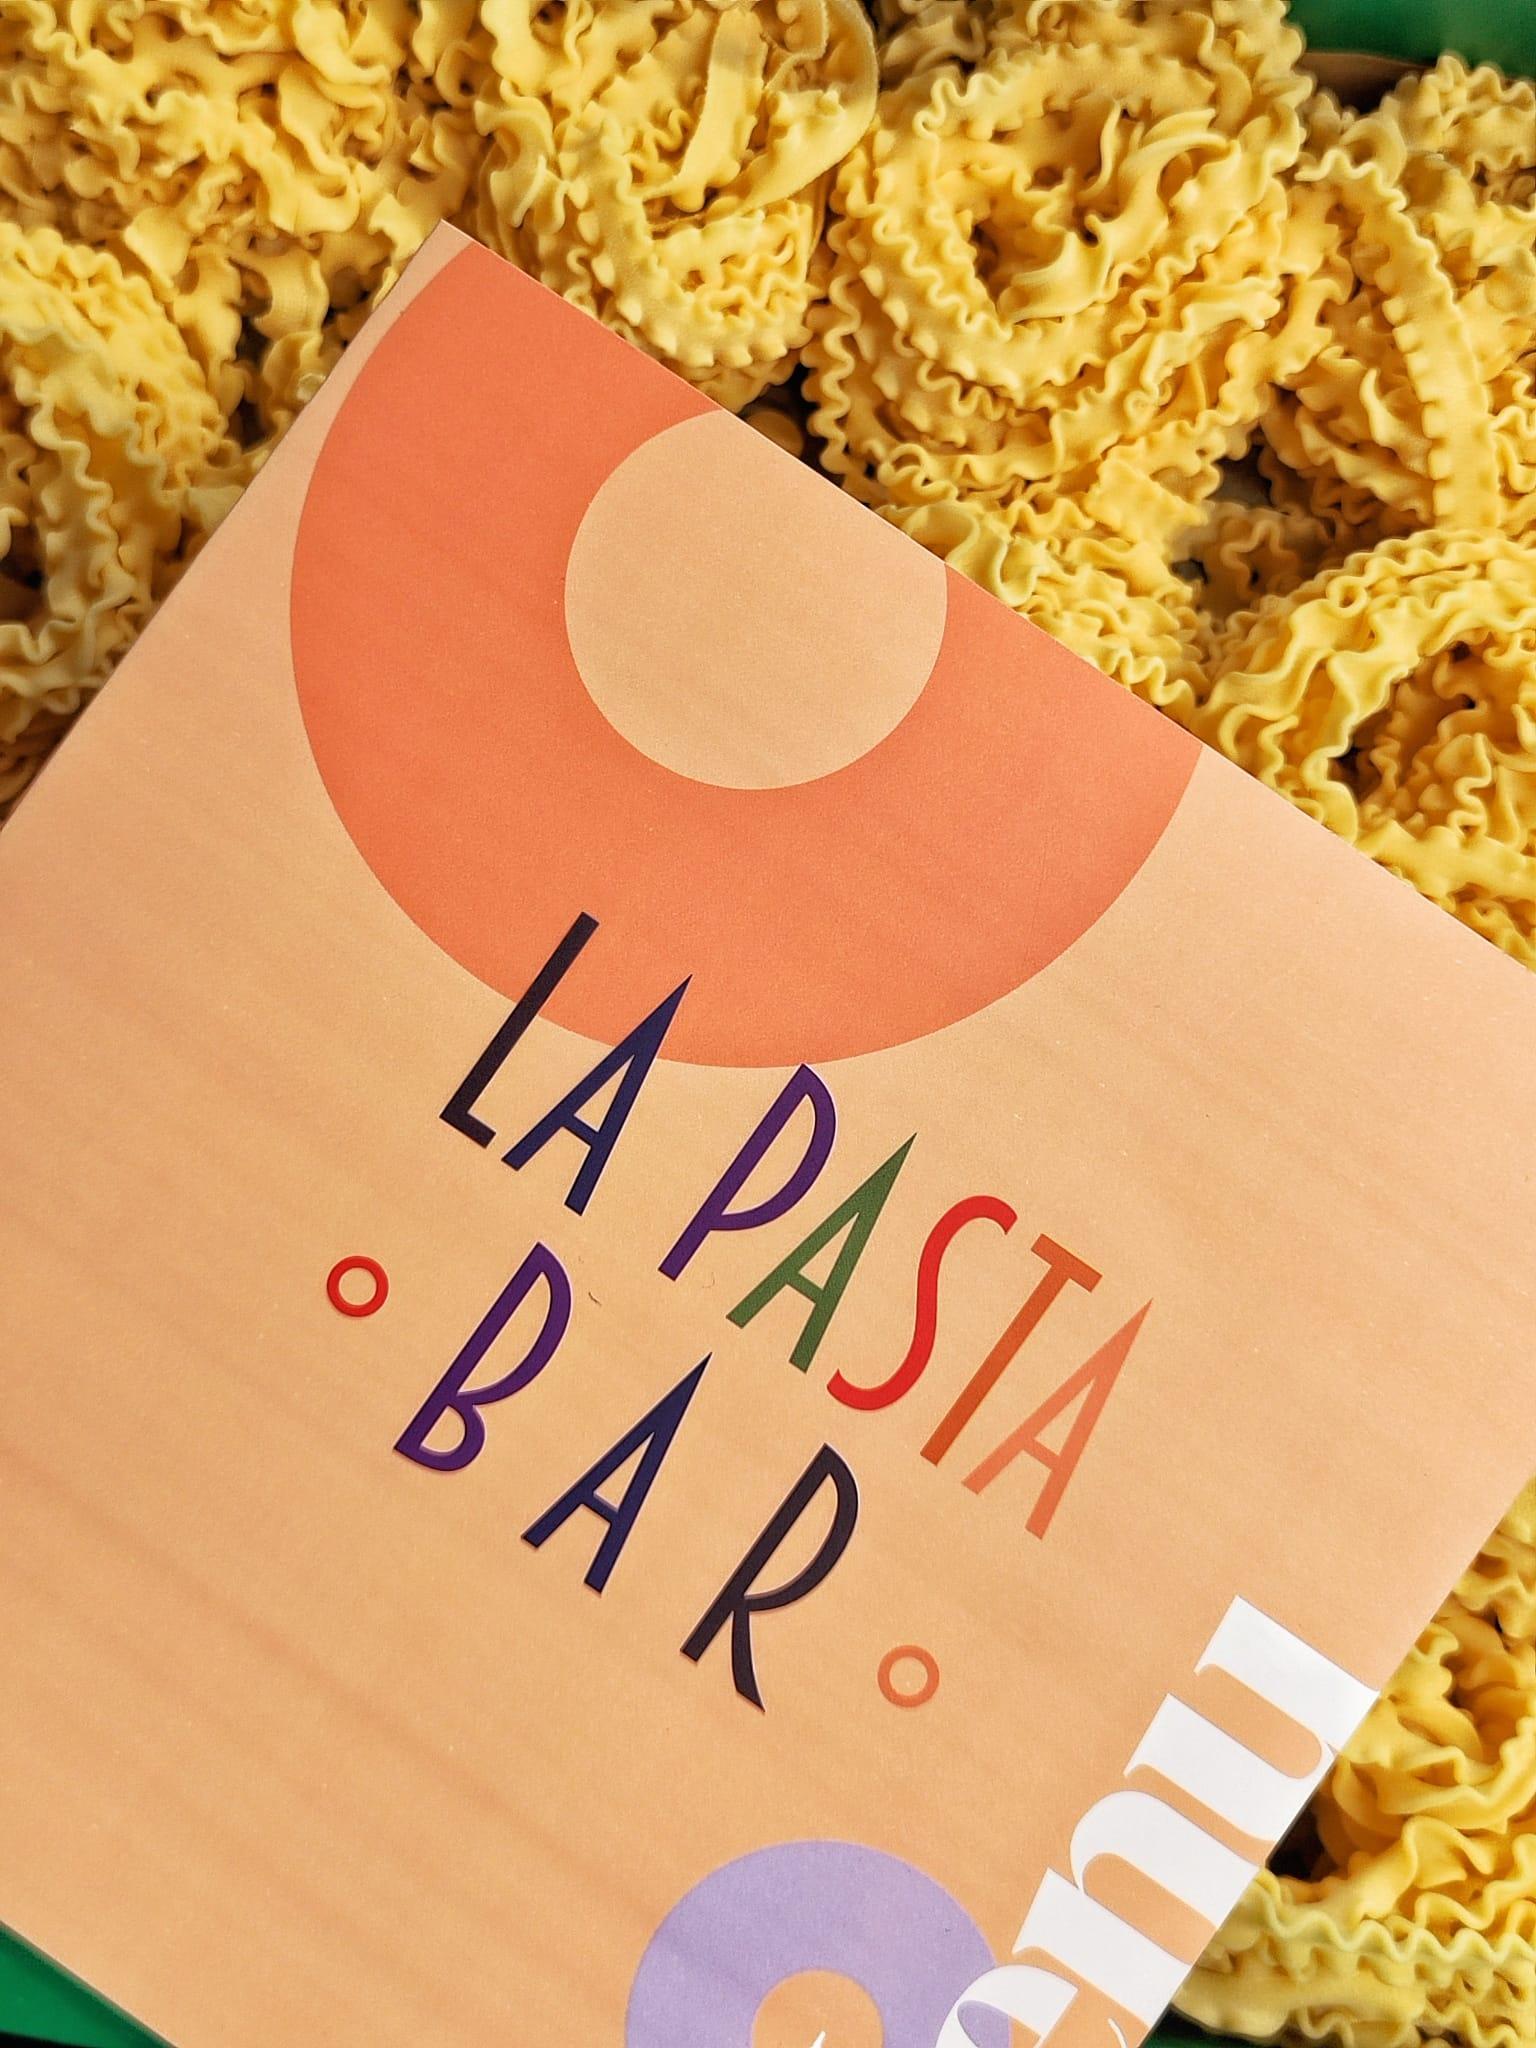 La Pasta Bar w Katowicach!